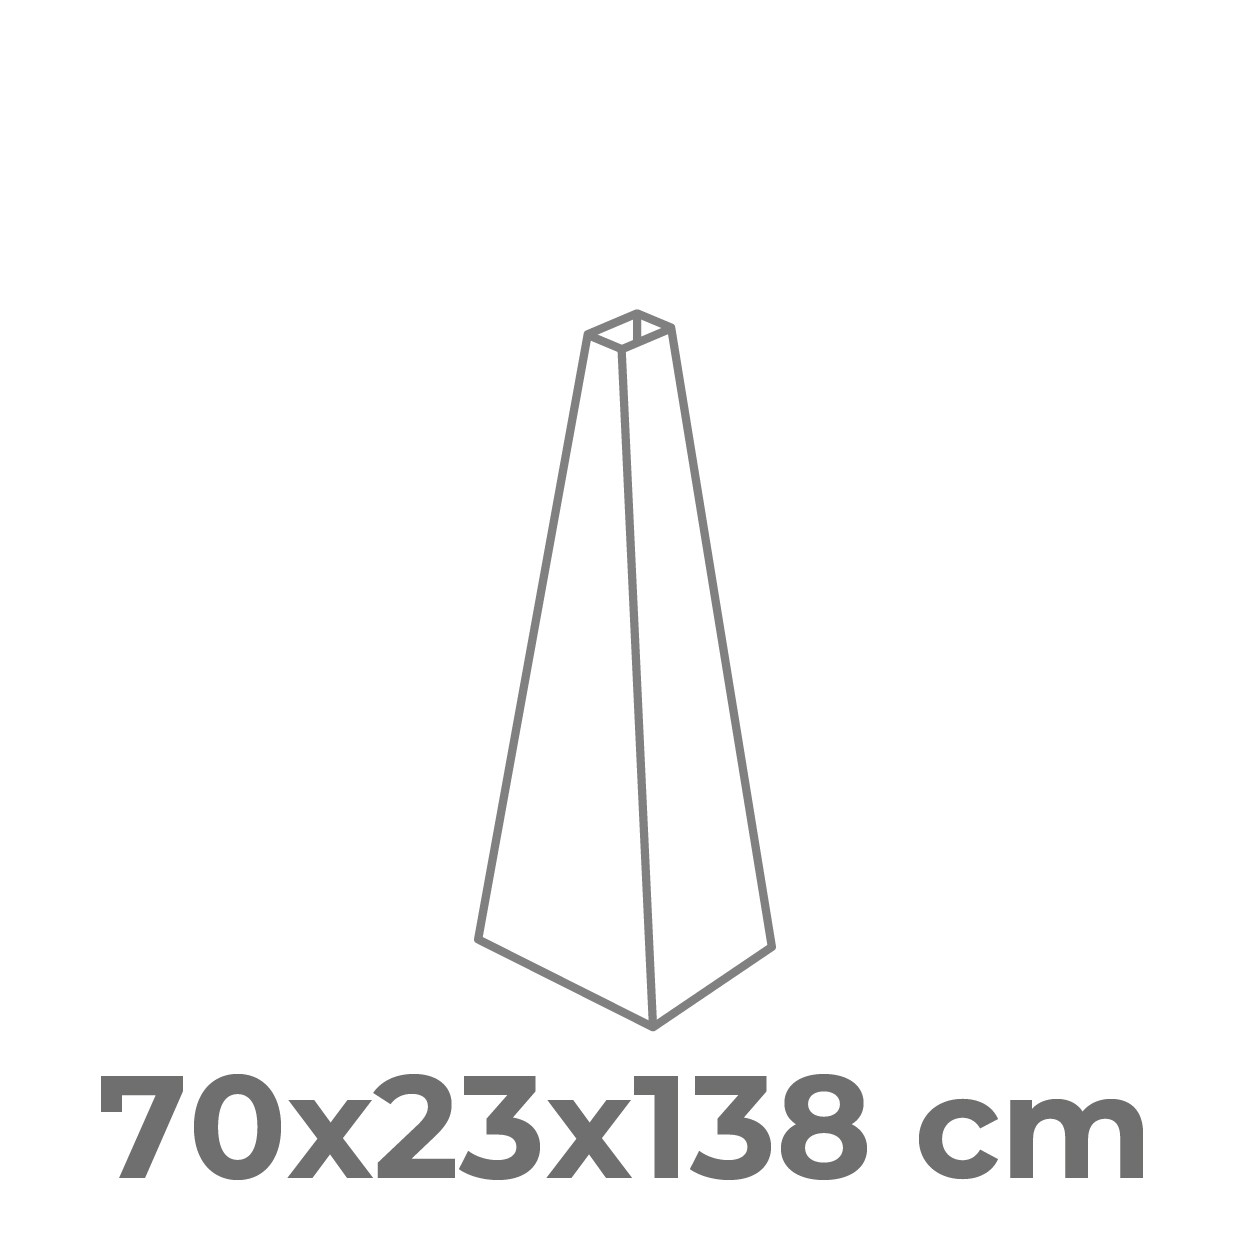 Piramidale piccolo - 70x23x138 cm